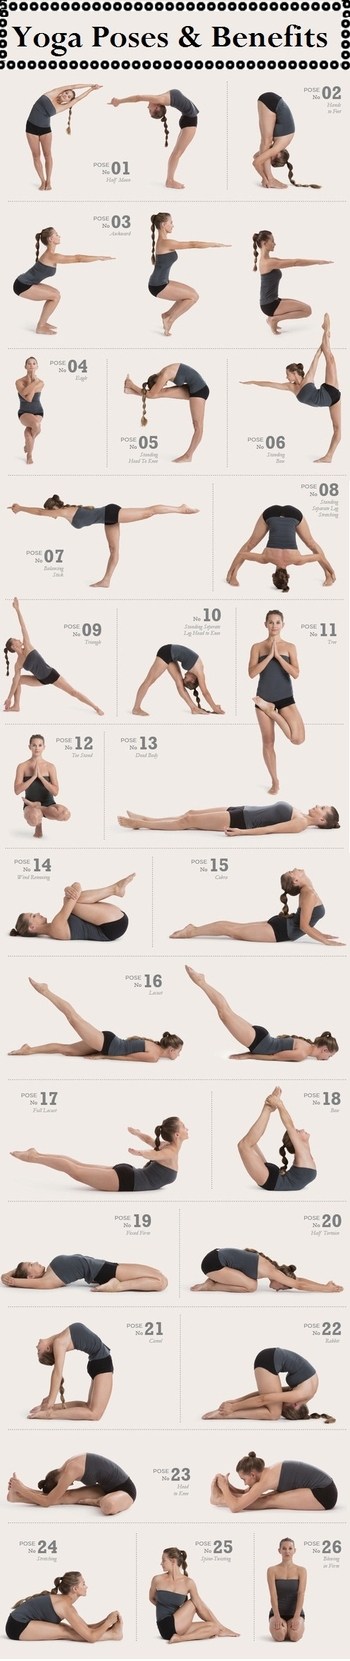 26 Common Yoga Poses